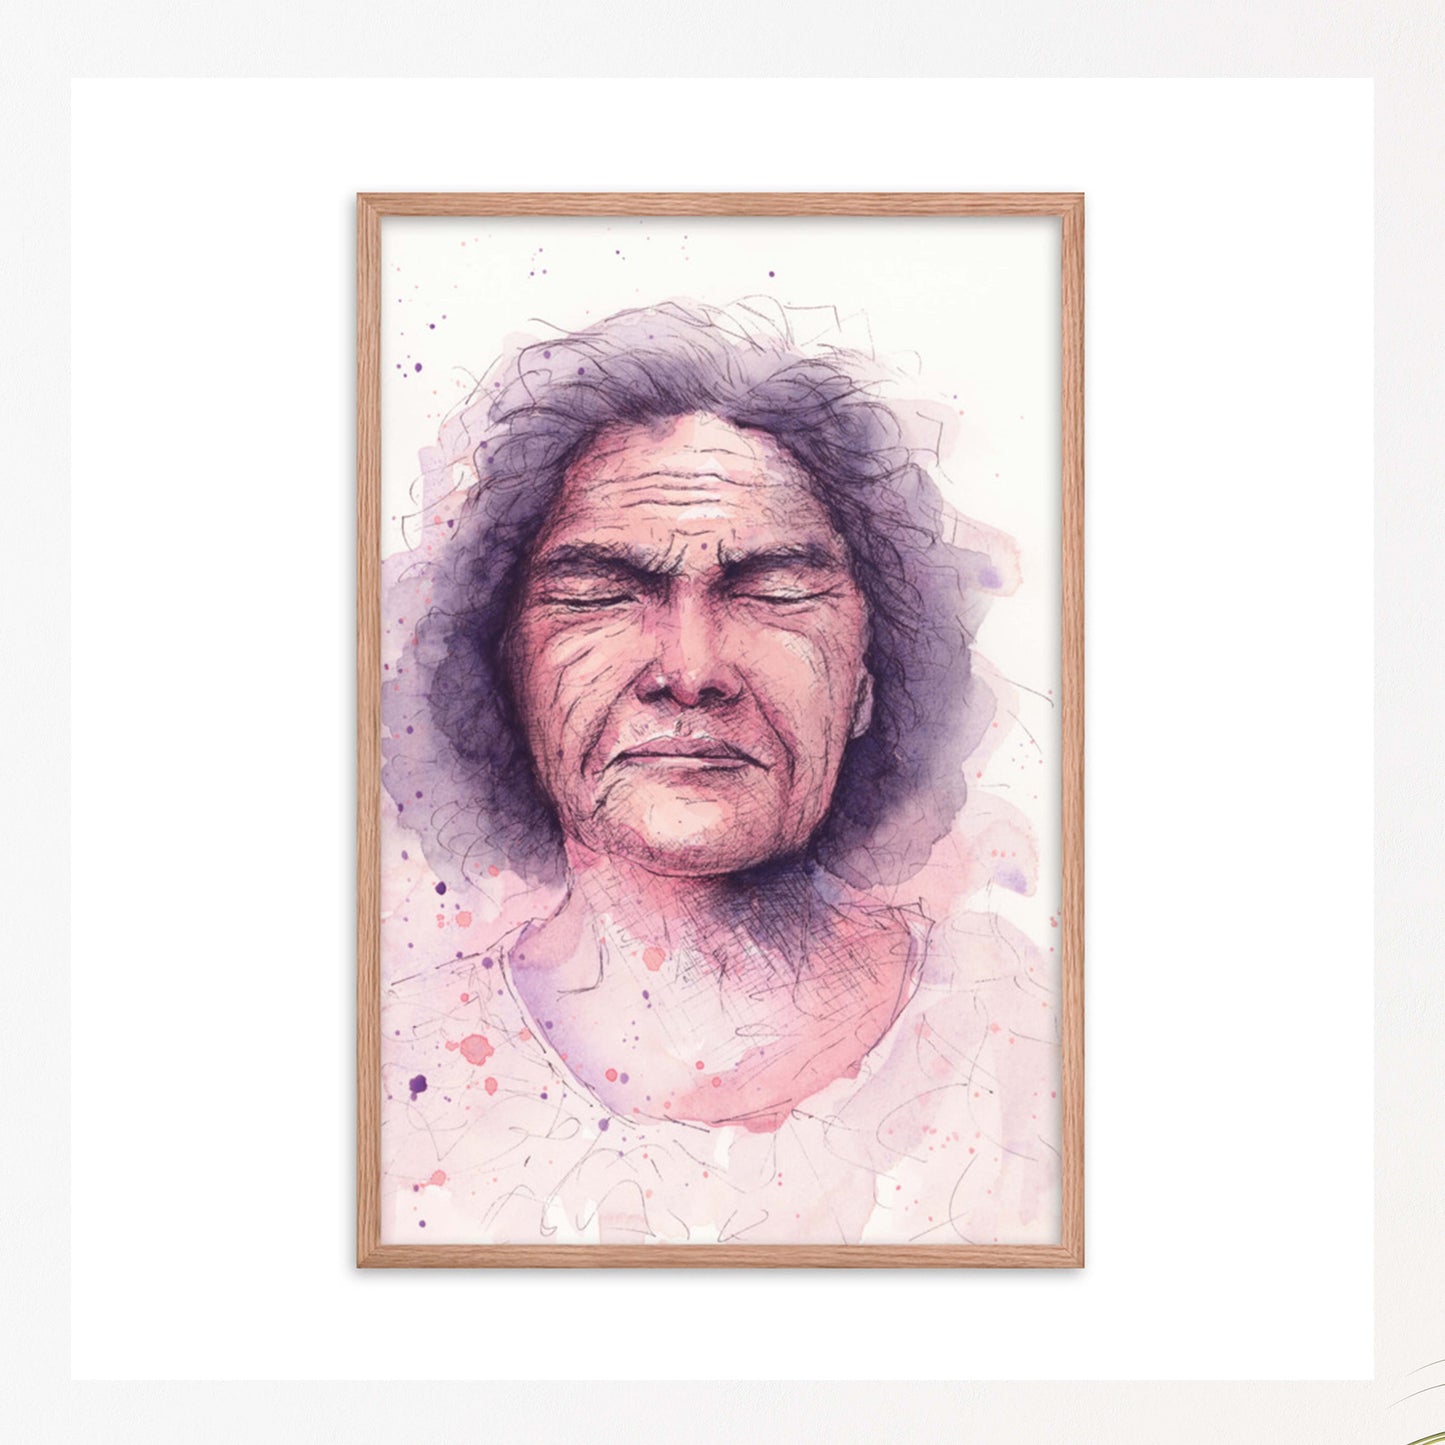 Oak Wood Framed Watercolor portrait of an old woman in watercolor & pen, purple, pink, white colors